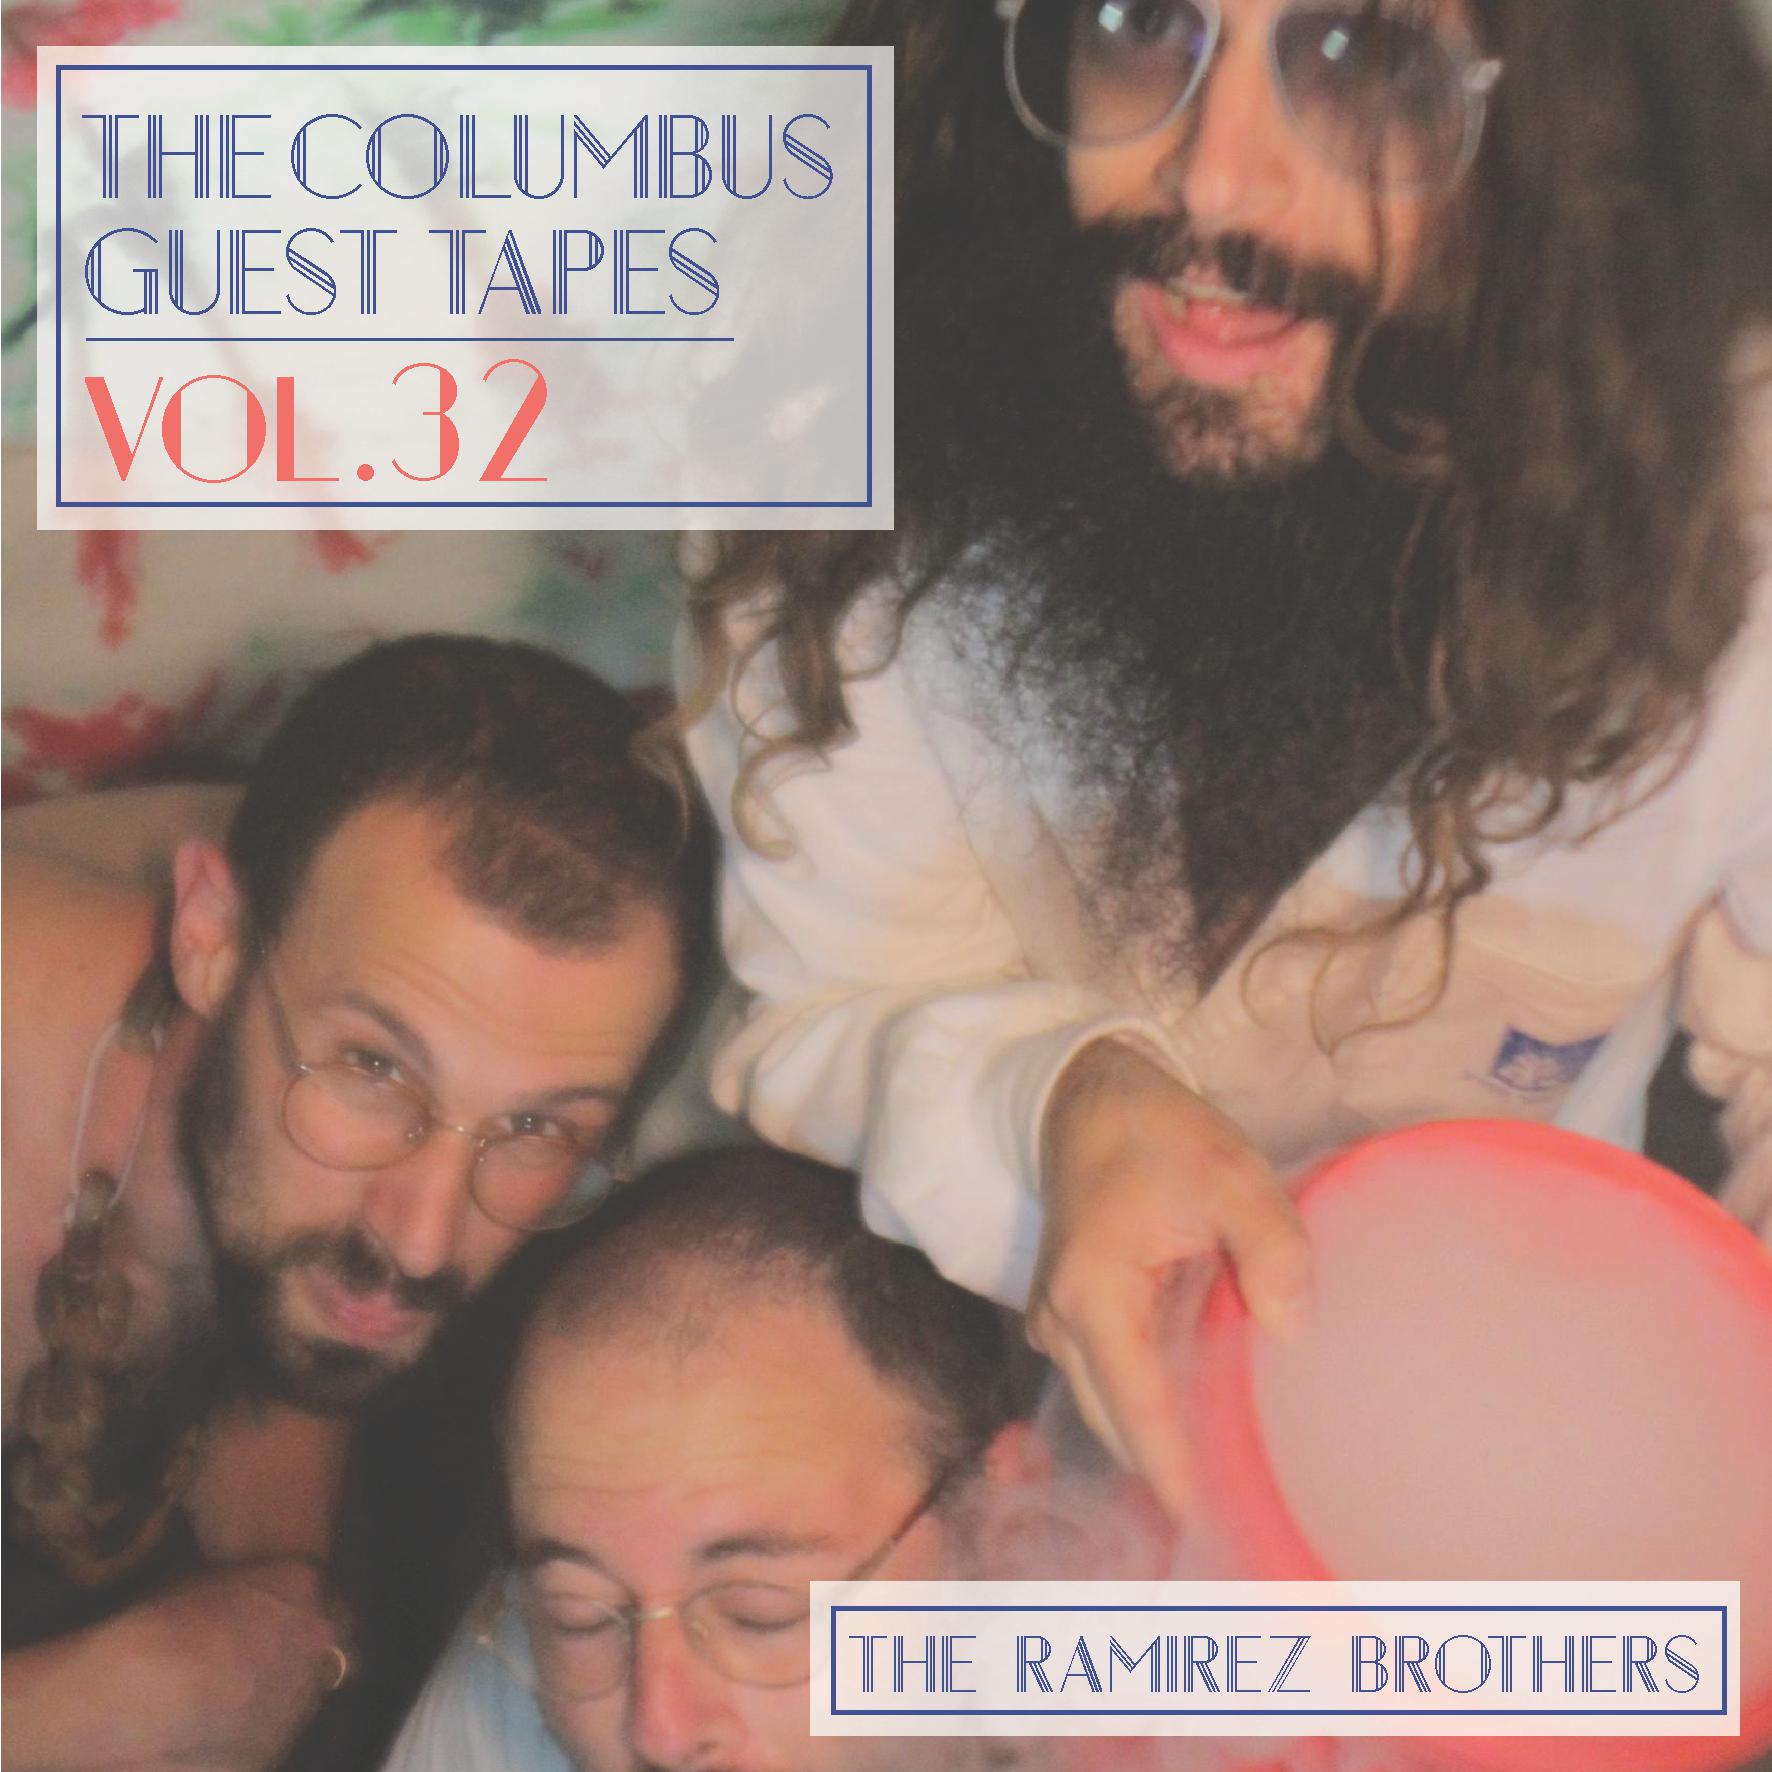 The Ramirez Brothers Vol.32